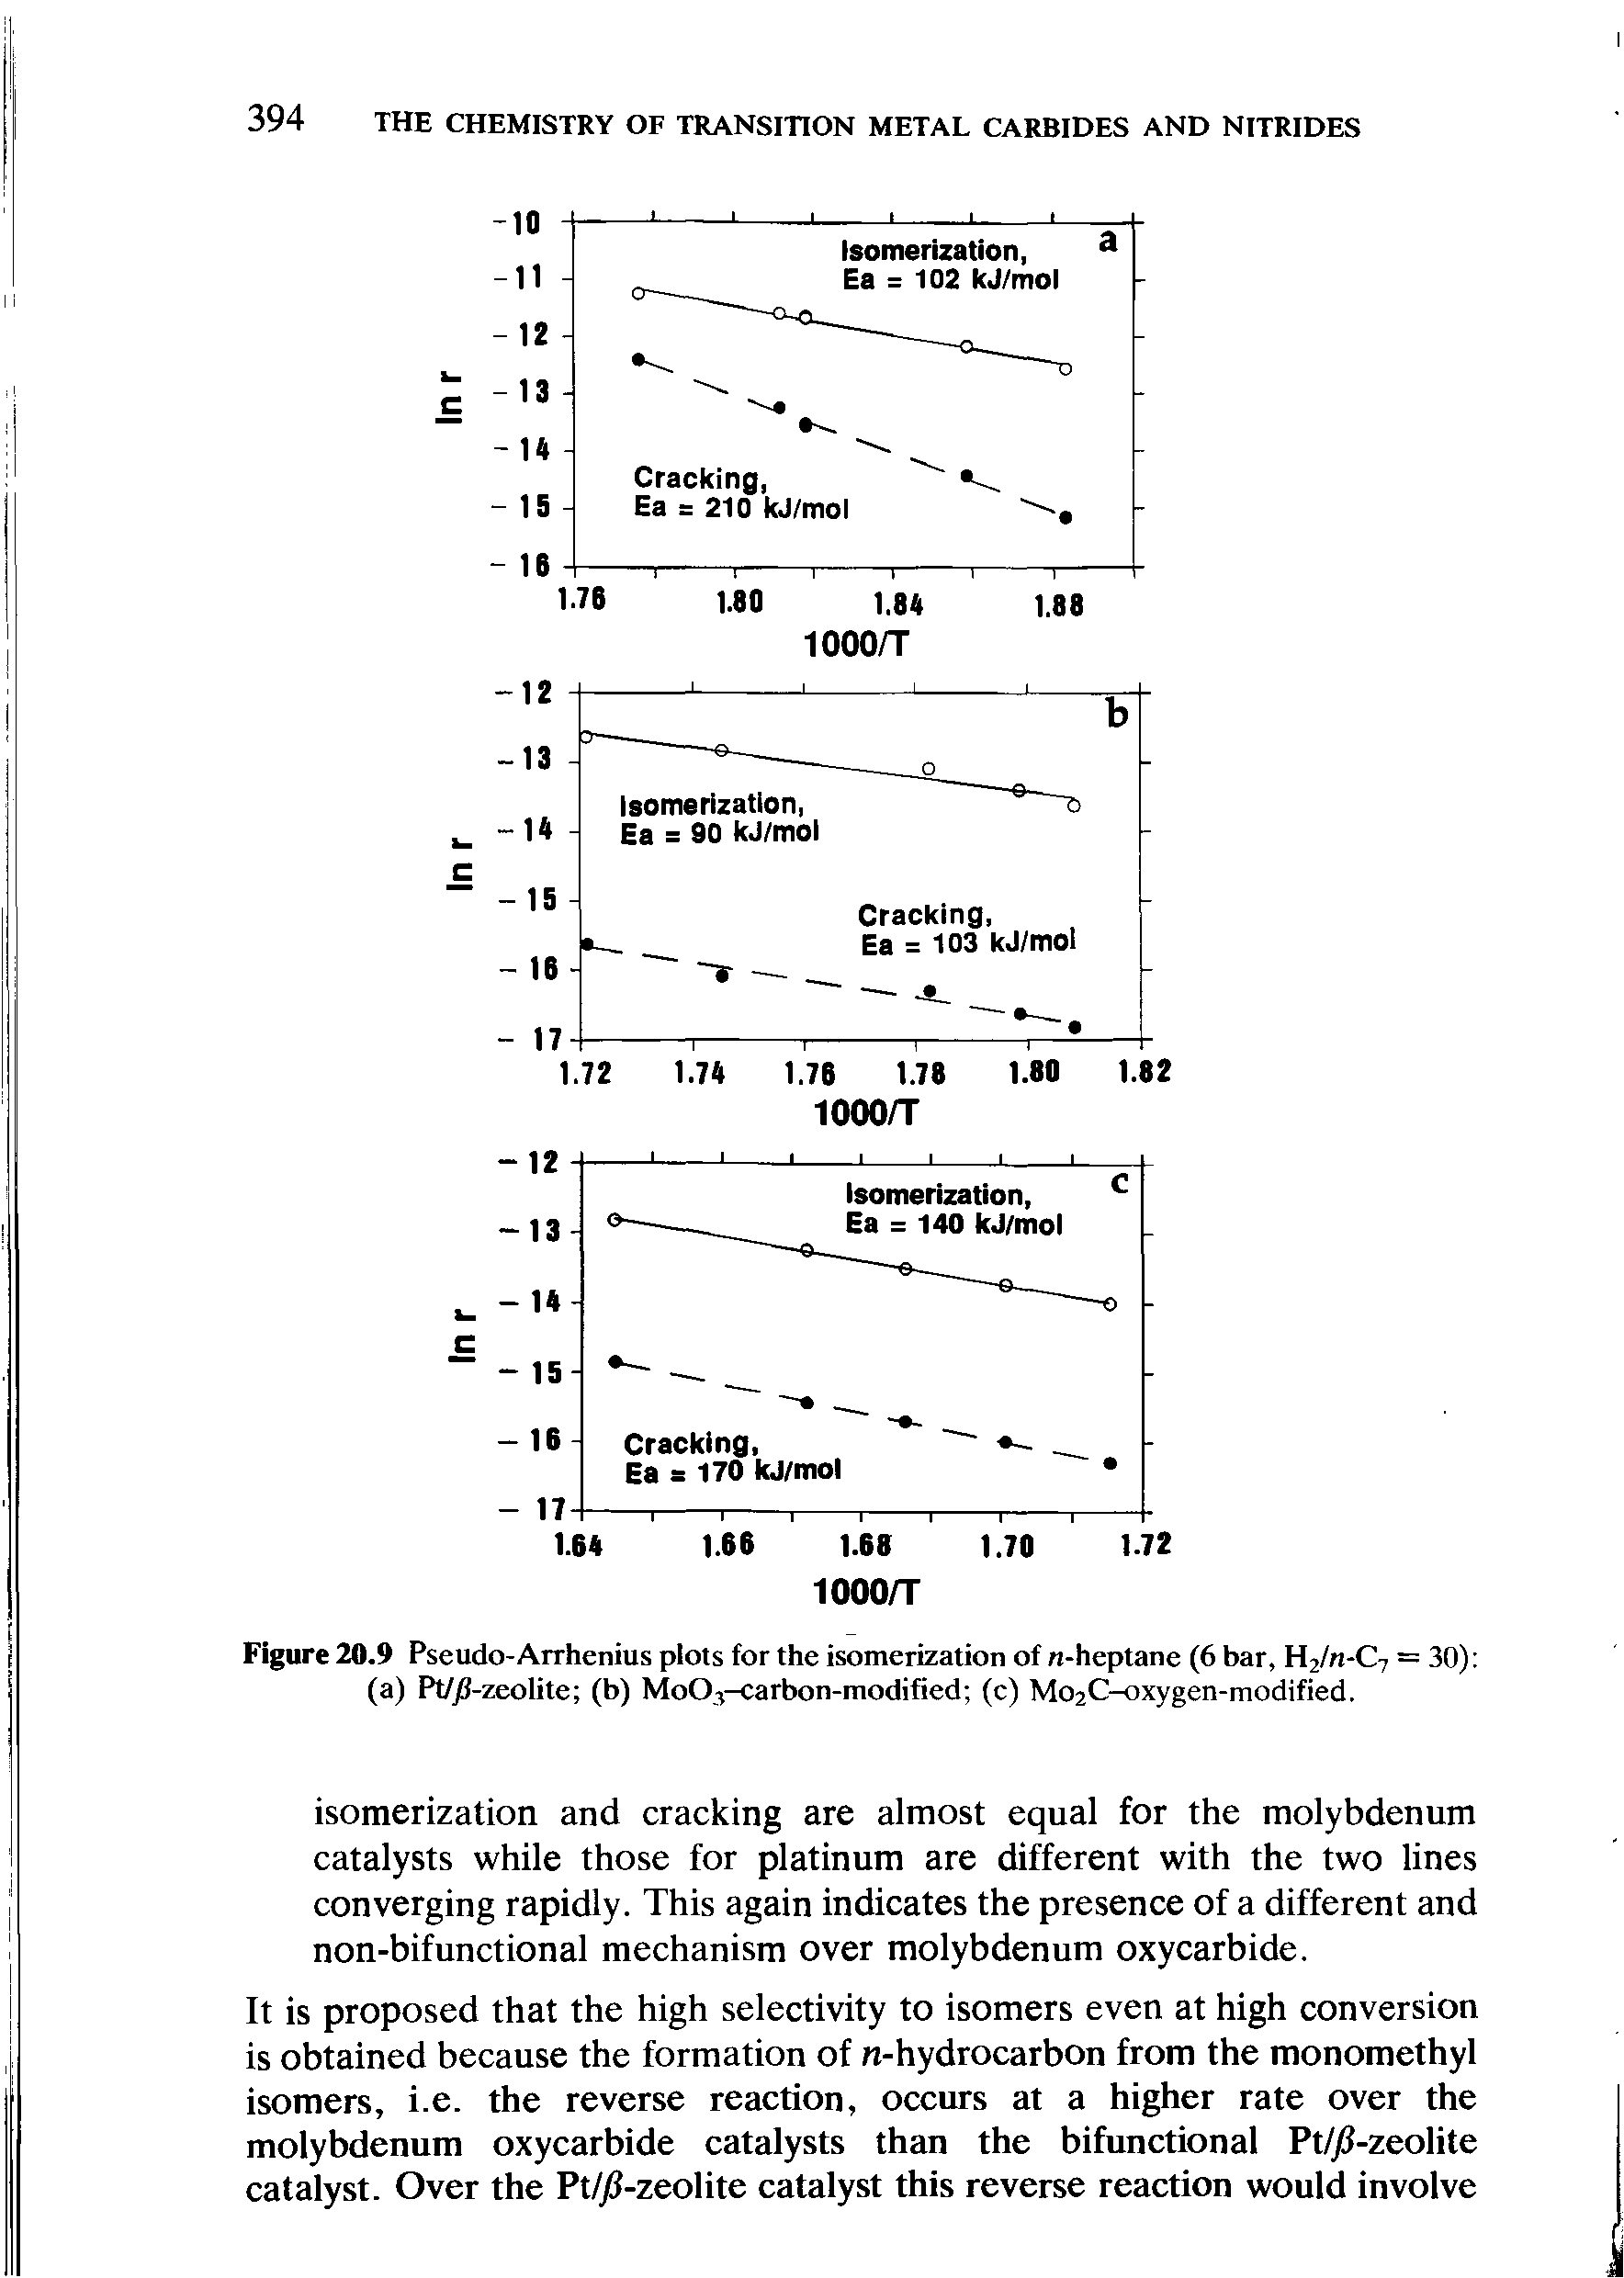 Figure 20.9 Pseudo-Arrhenius plots for the isomerization of n-heptane (6 bar, H2/n-C7 = 30) (a) Pt/jS-zeolite (b) MoO -carbon-modi ficd (c) Mo2C-oxygen-modified.